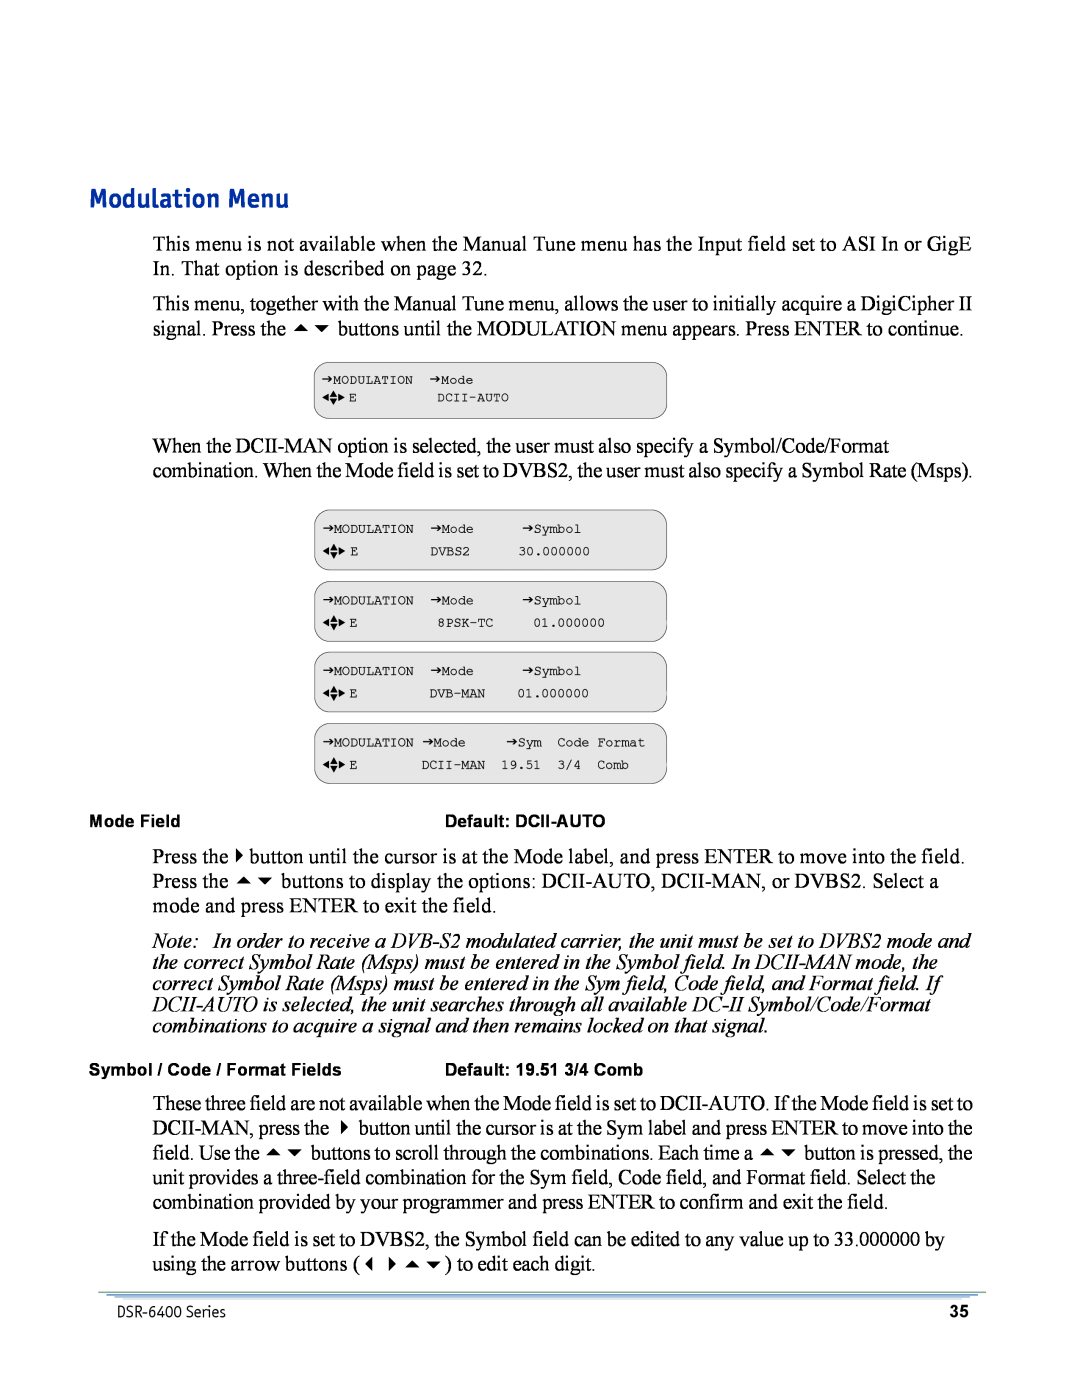 Motorola DSR-6400 Modulation Menu, Mode Field, Default DCII-AUTO, Symbol / Code / Format Fields, Default 19.51 3/4 Comb 